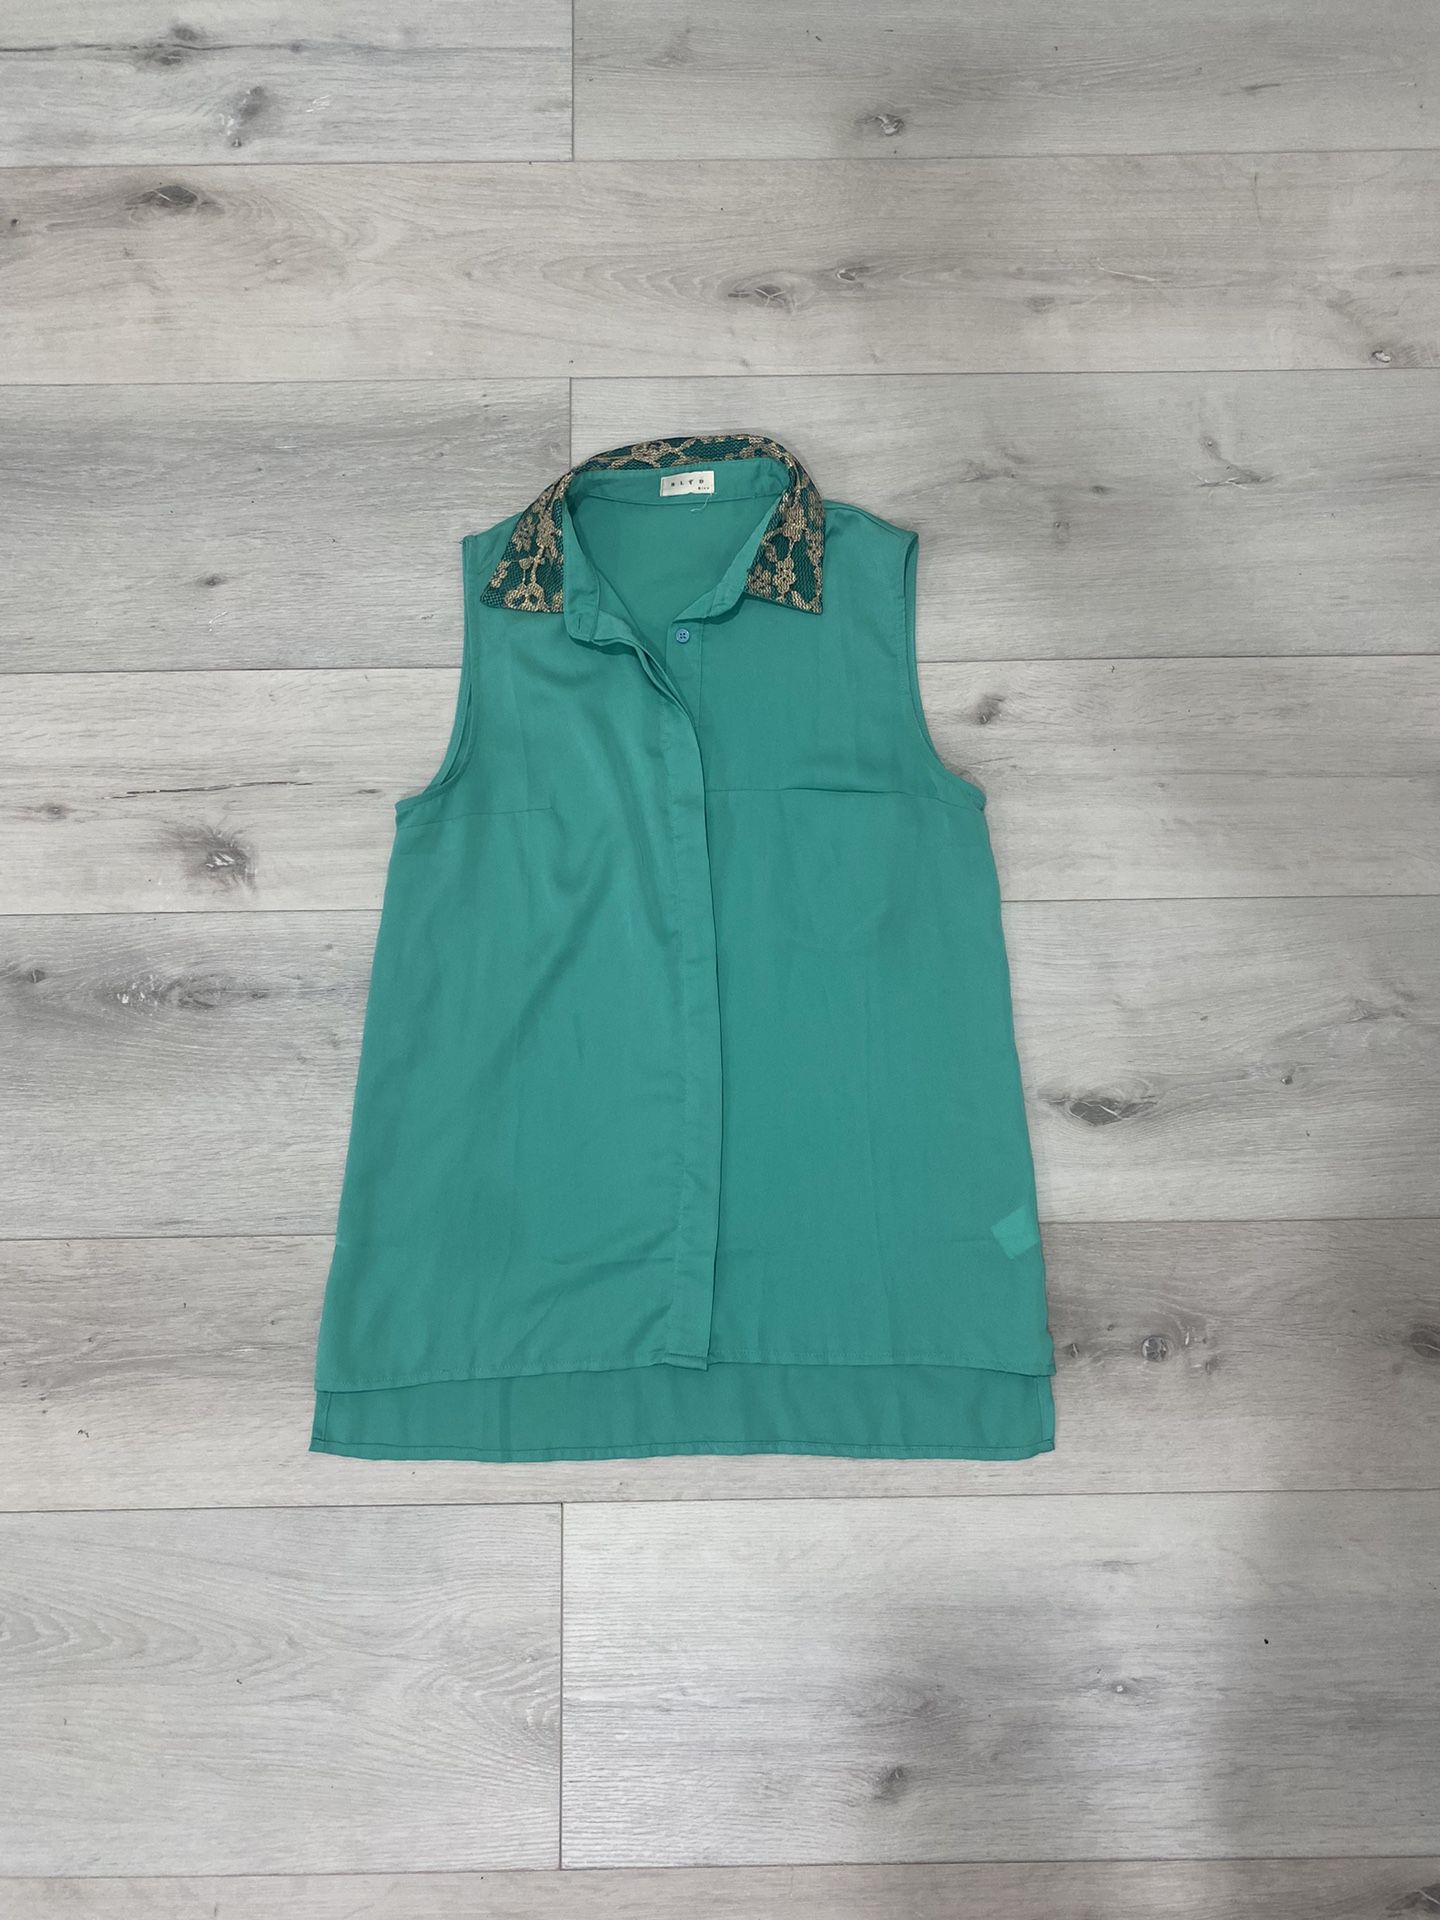 Charter Club Womens Petite Cotton Shirt Turquoise Stone Gold